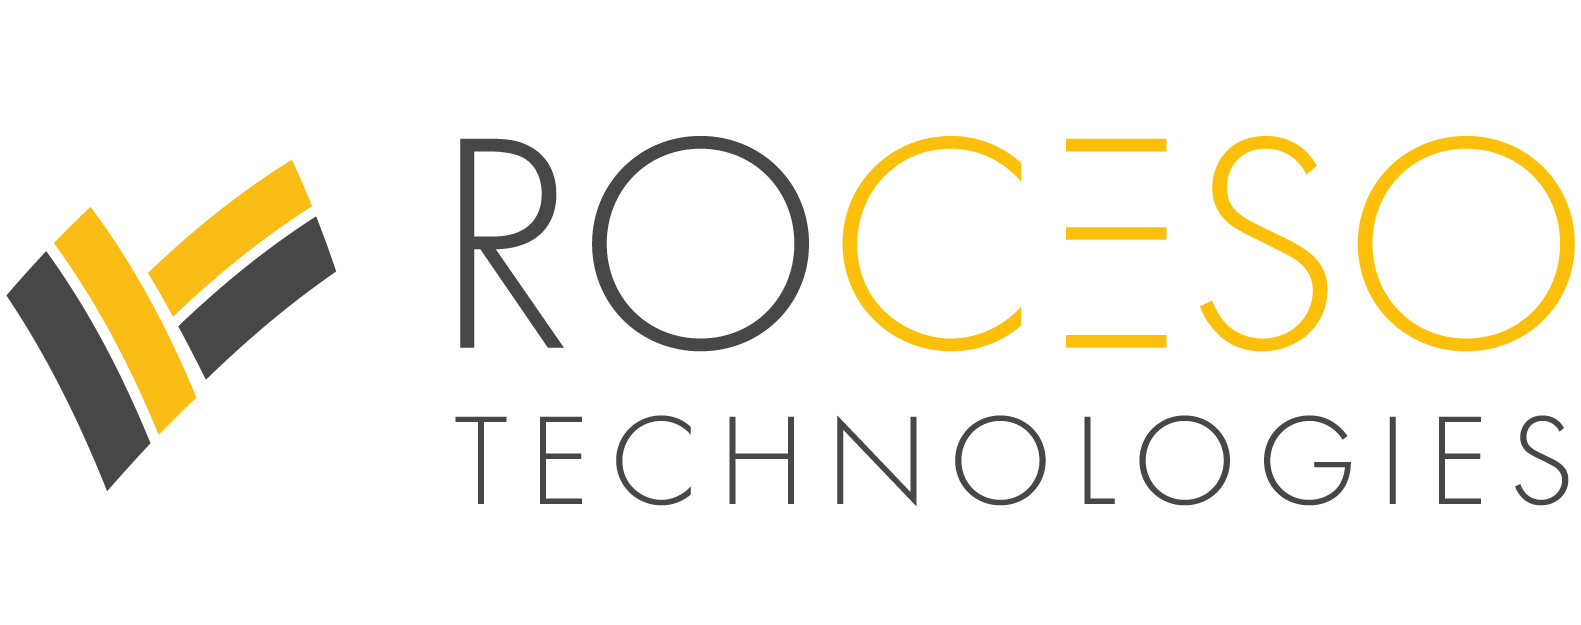 Roceso Technologies